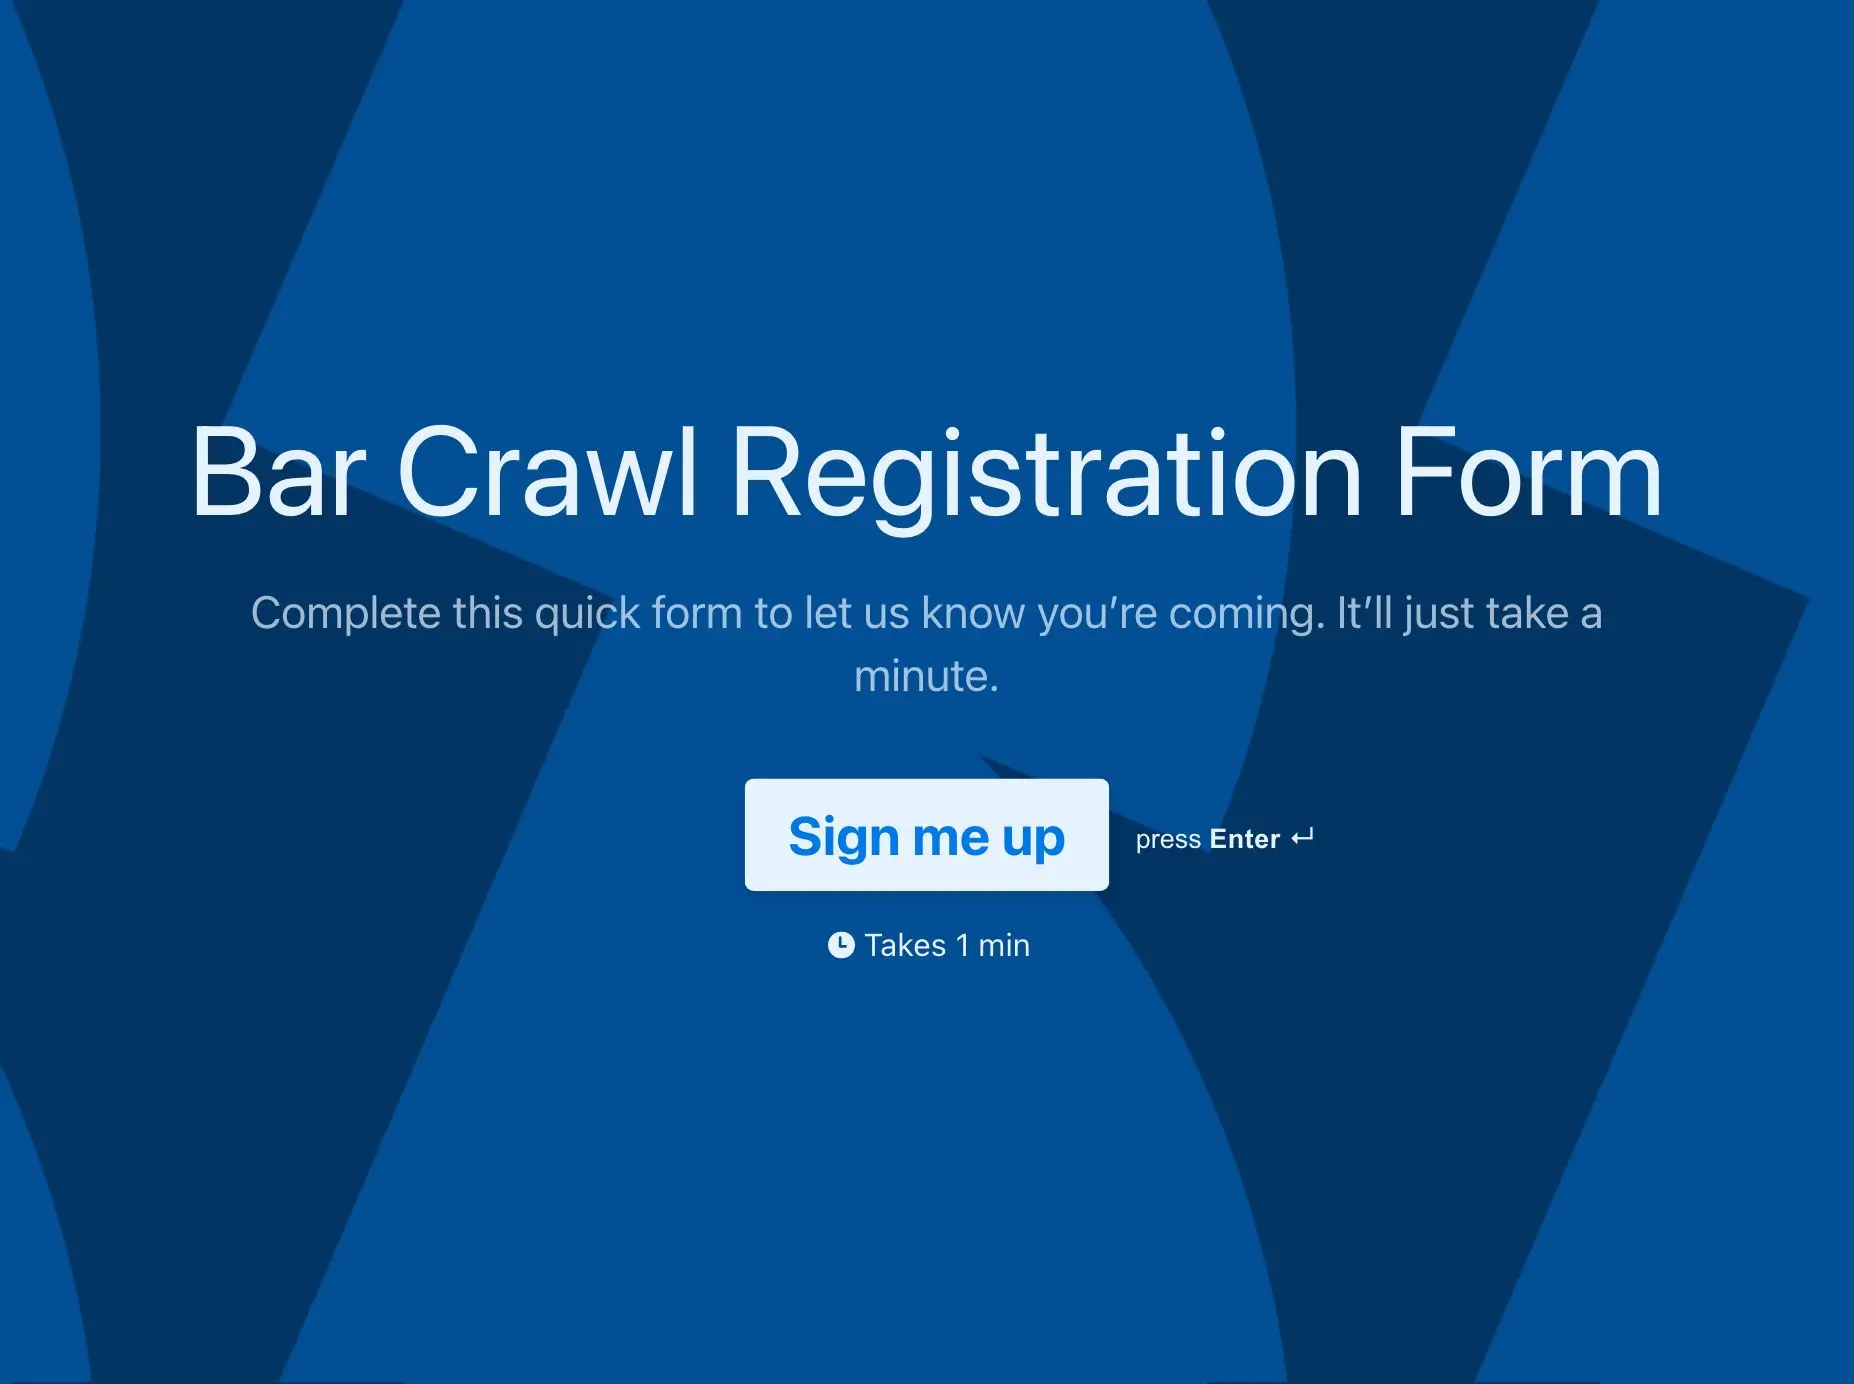 Bar Crawl Registration Form Template Hero